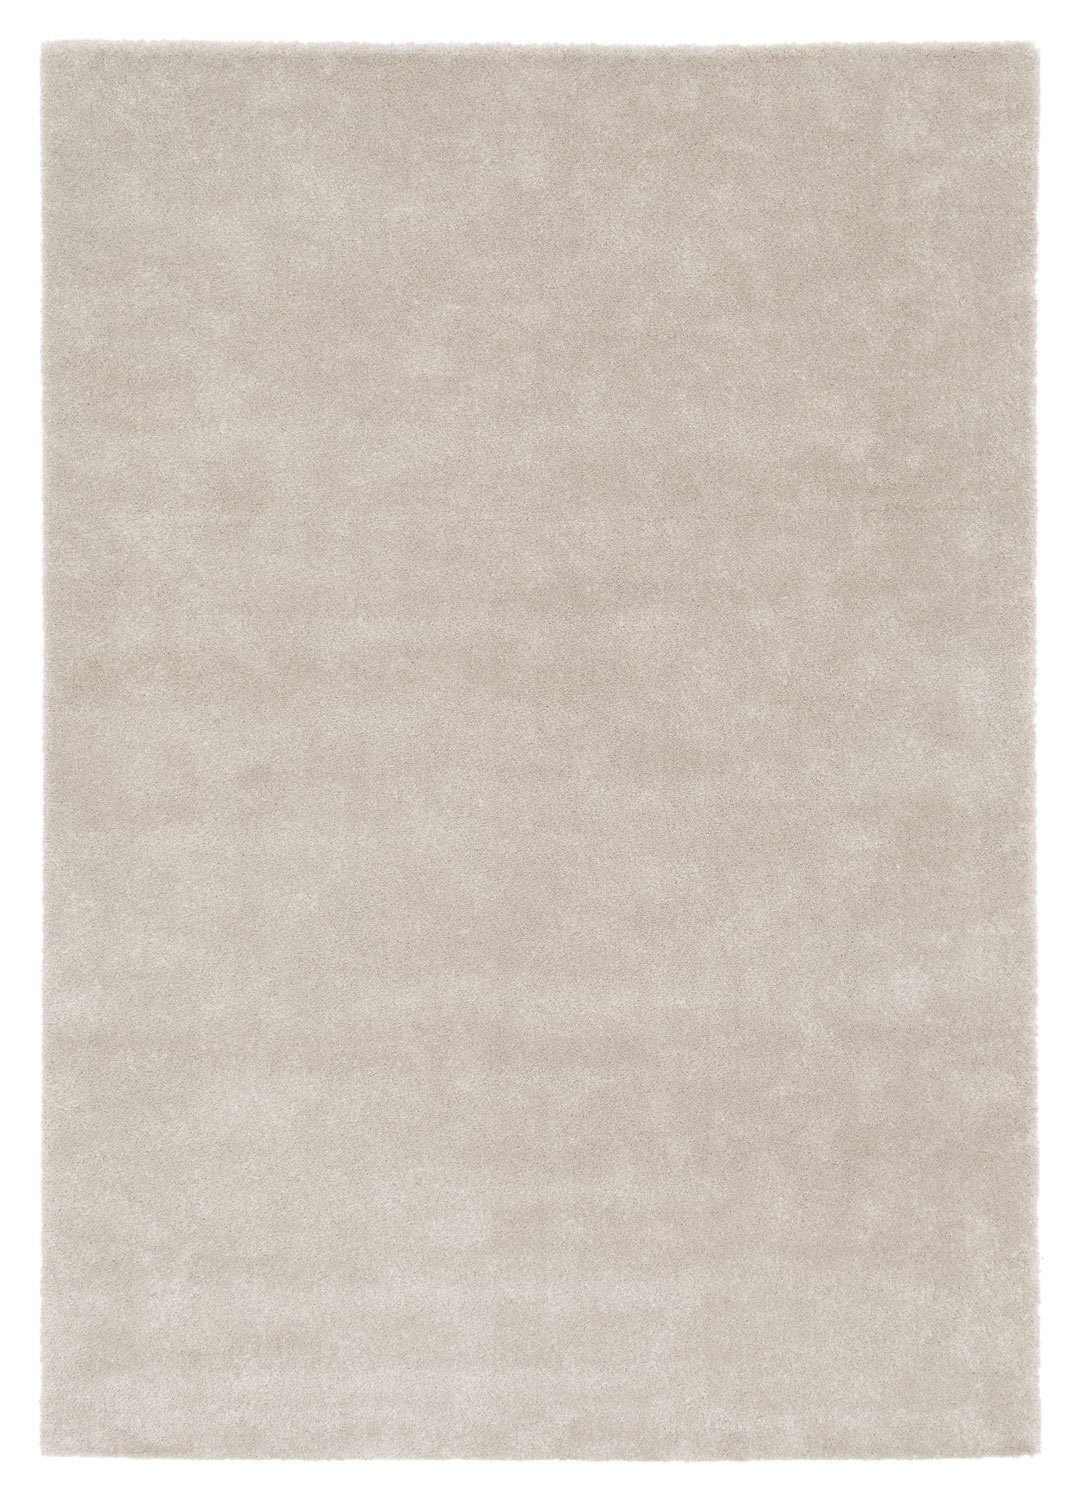 Teppich MOON, Polypropylen, Beige, 160 x 230 cm, Unifarben, Balta Rugs, rechteckig, Höhe: 17 mm